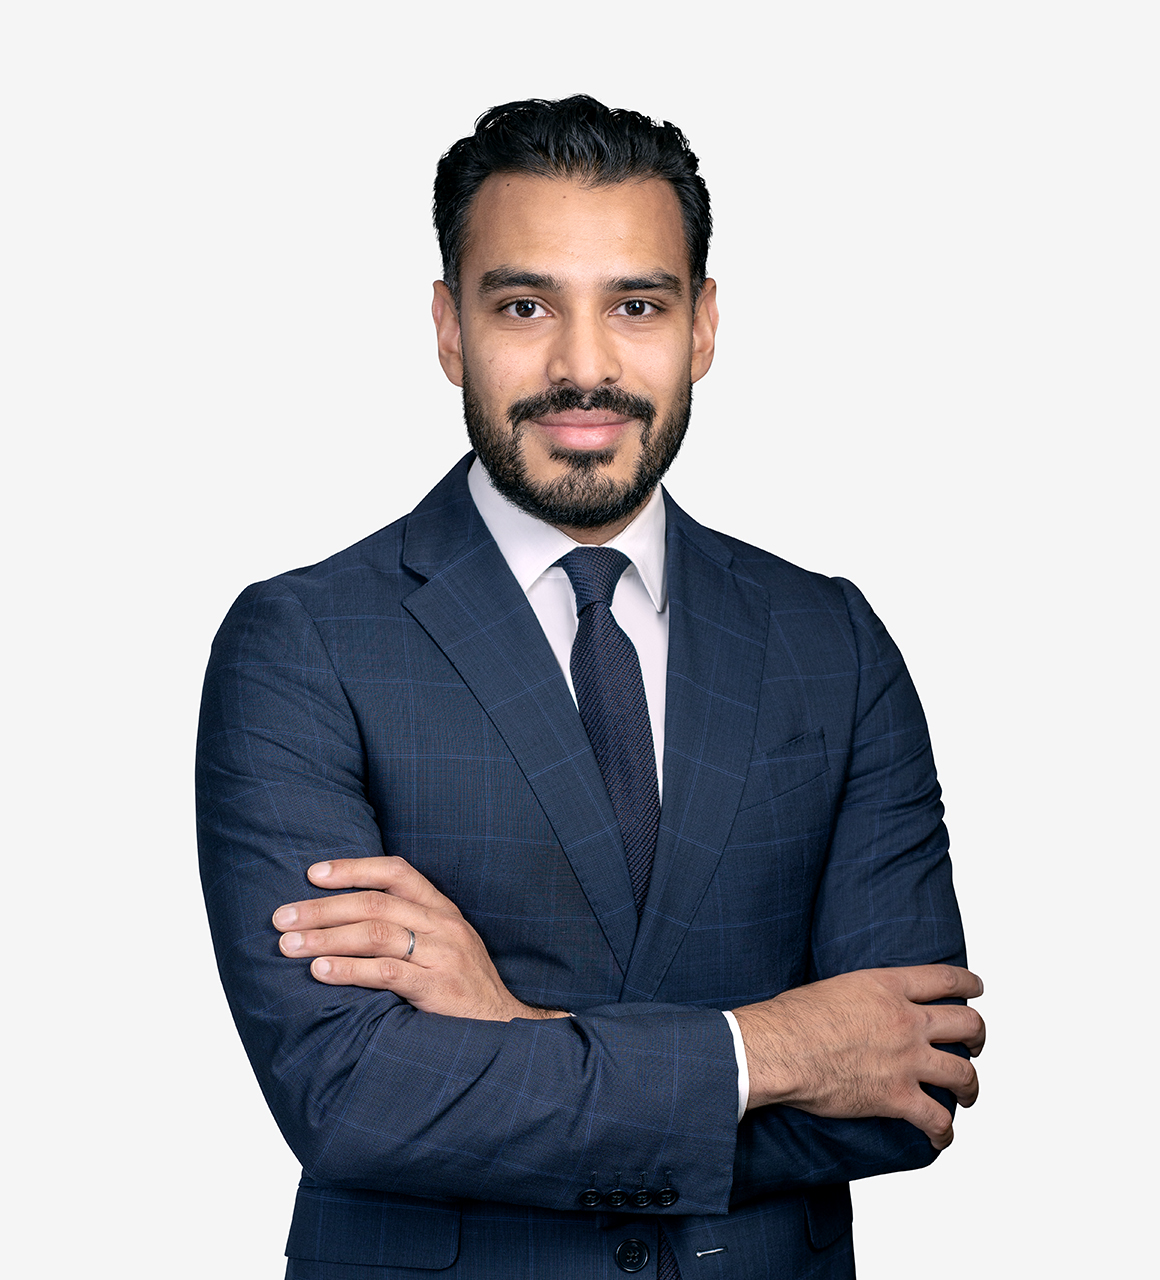 Mohammed Farooqui, Associate, ArentFox Schiff